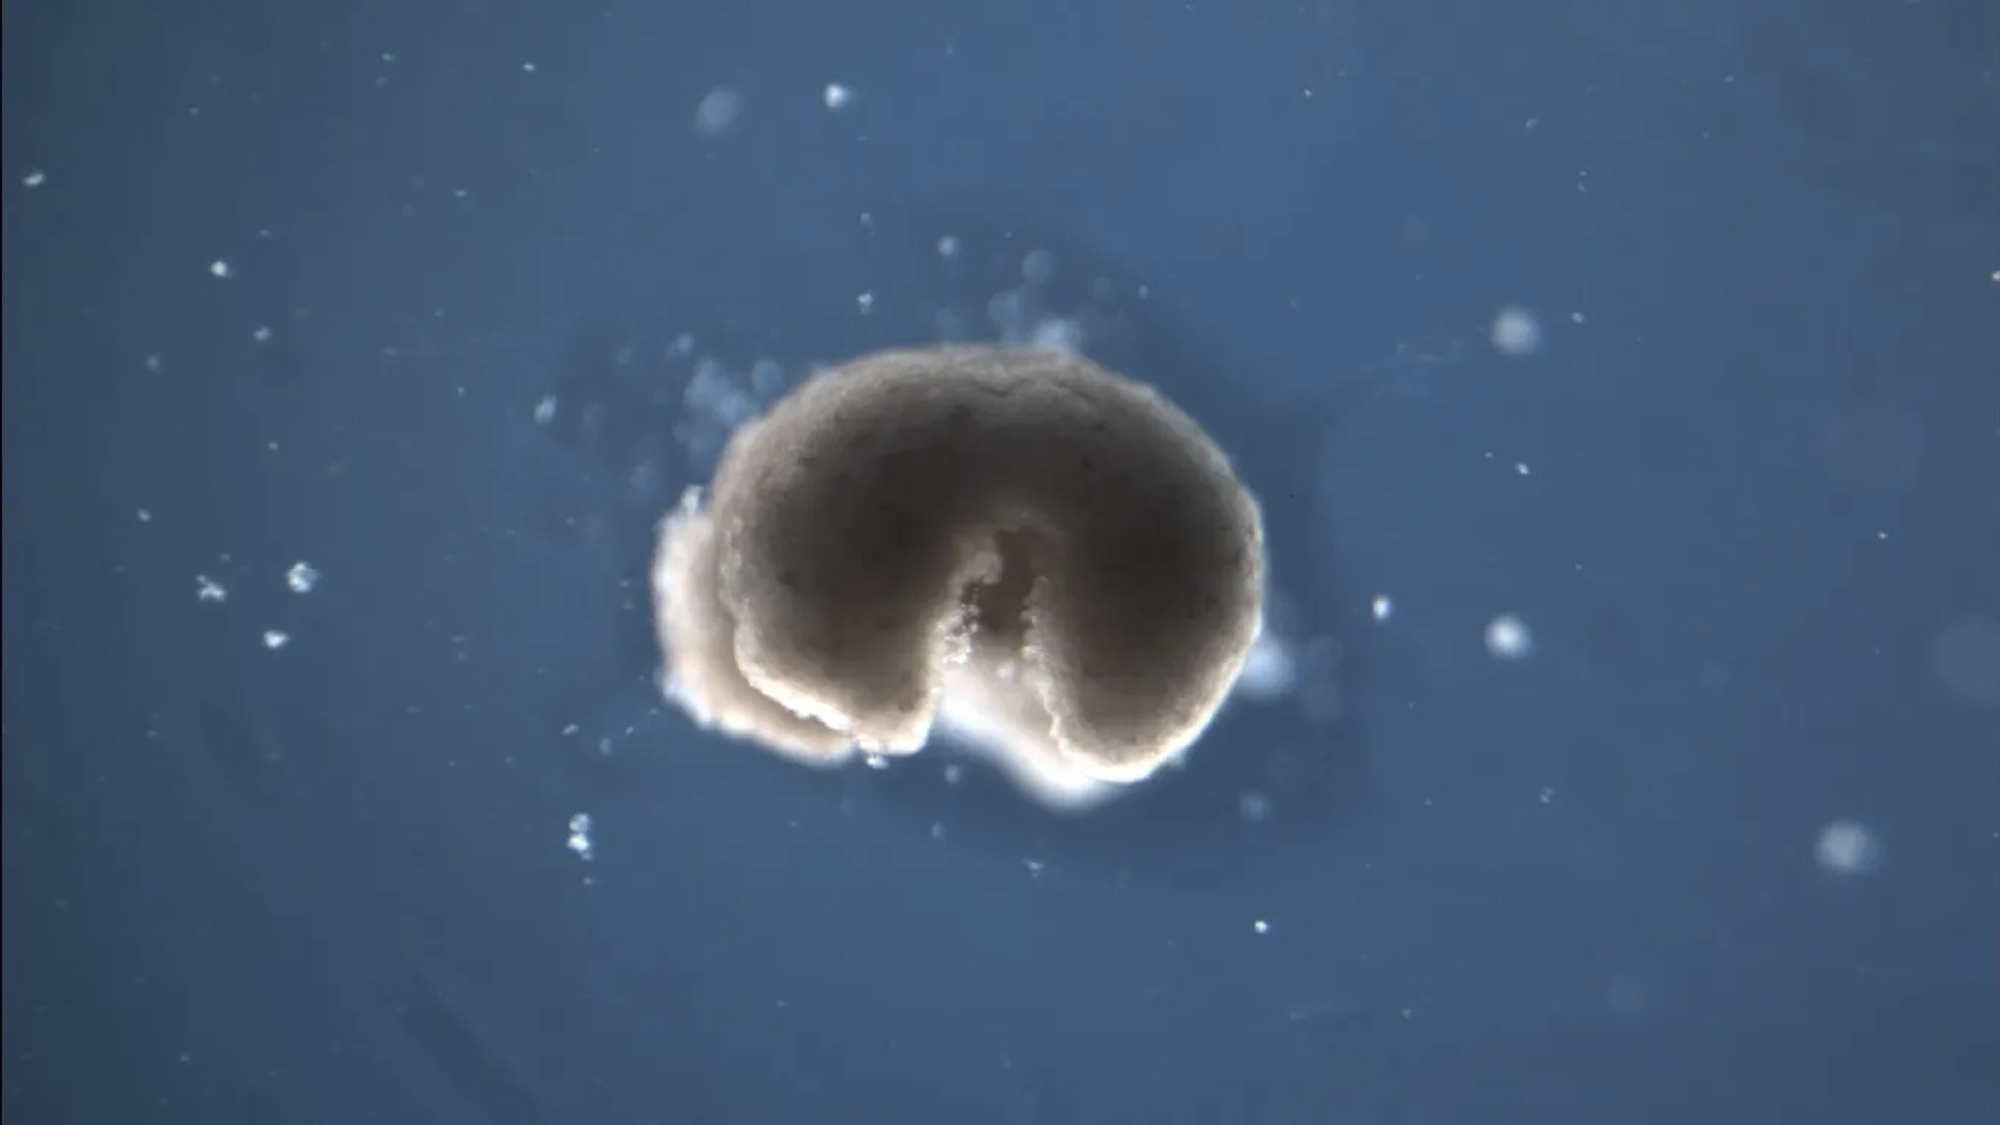 A Xenobot in a Petri dish